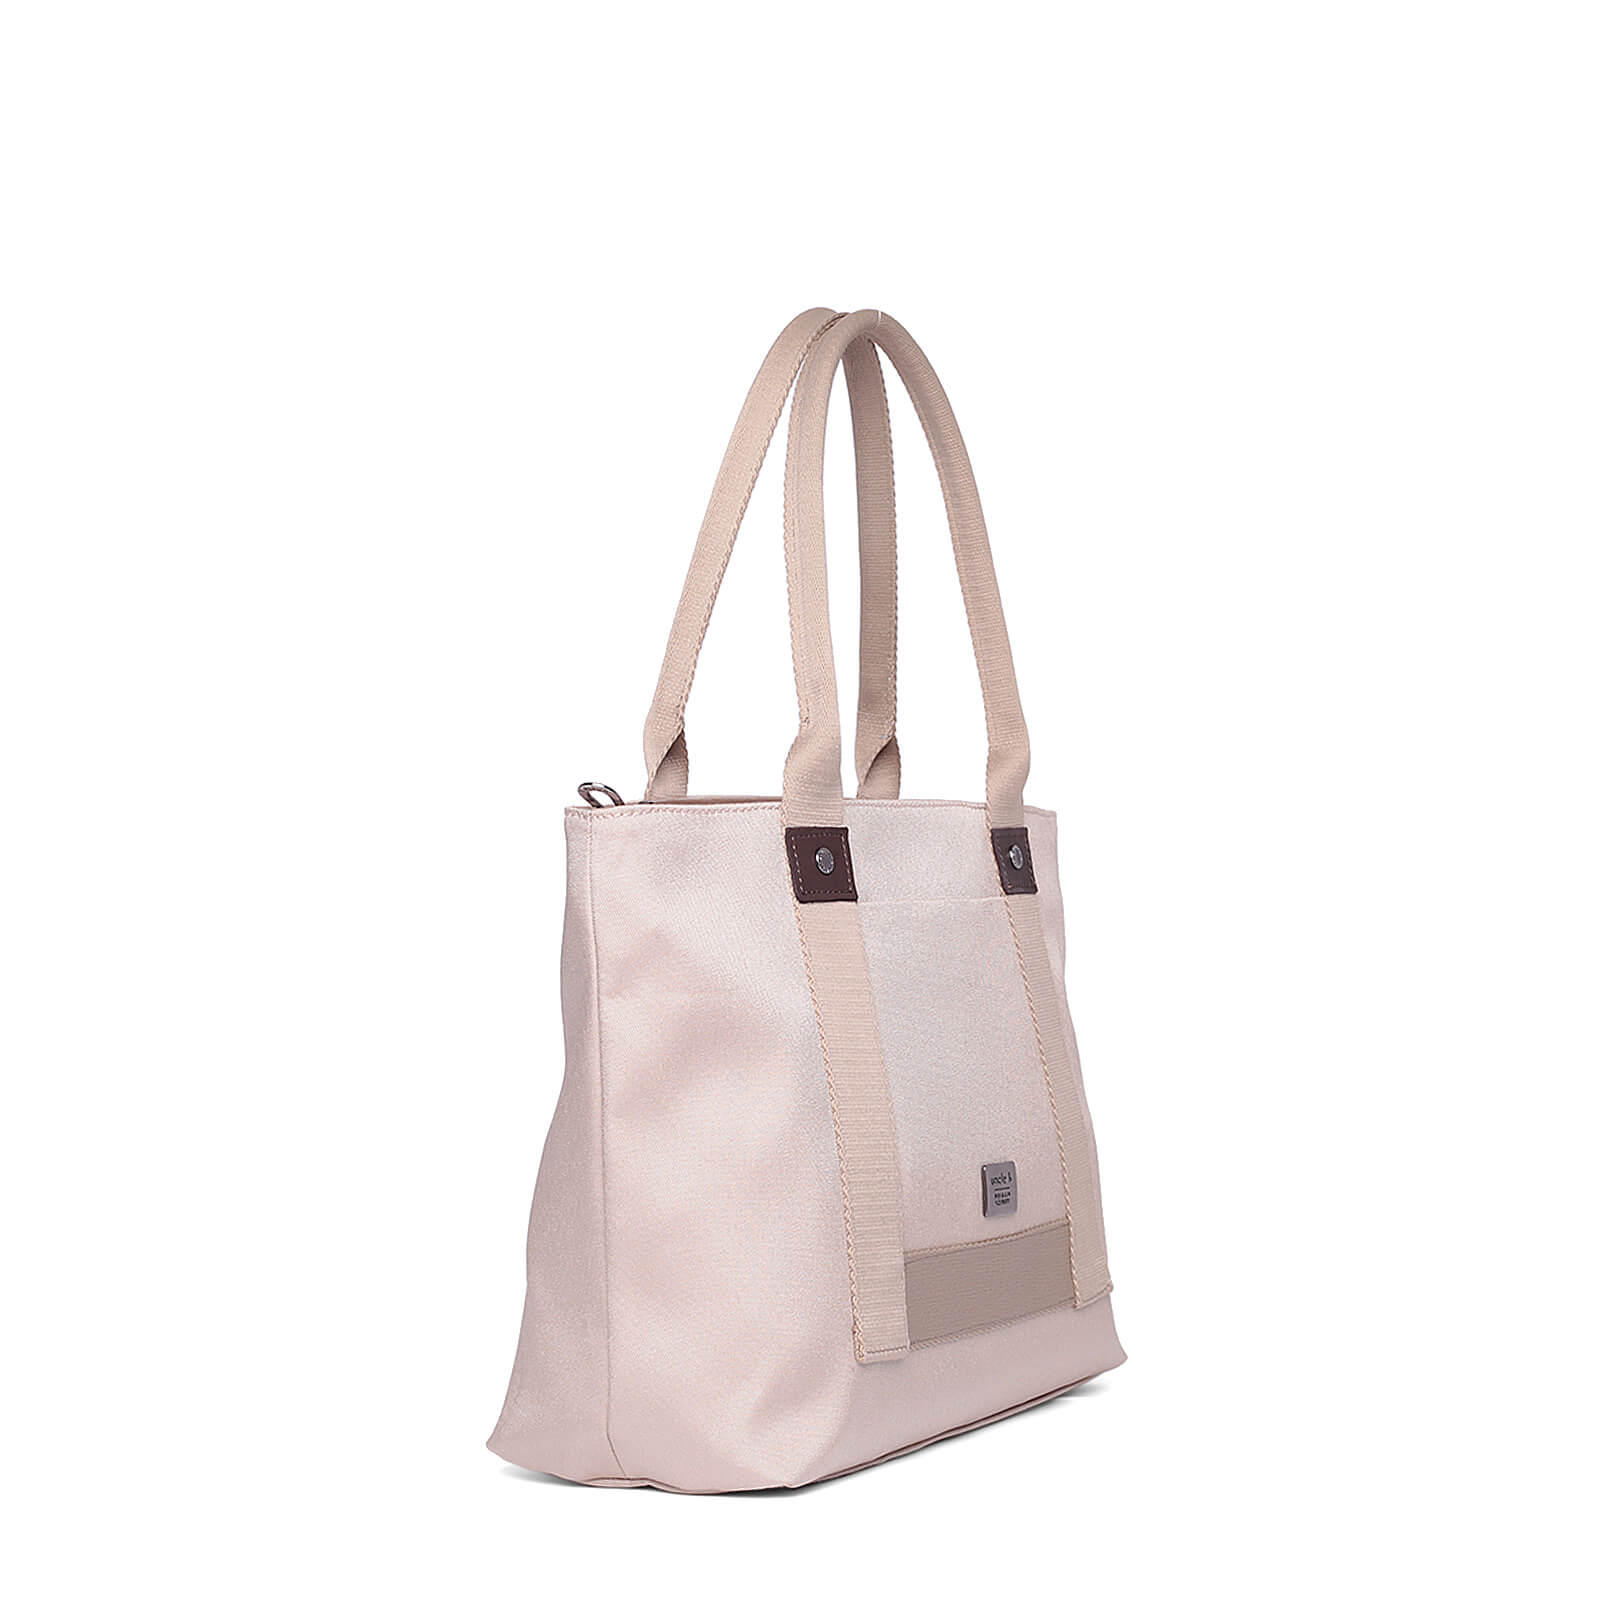 bolsa-shopping-bag-nylon-61092-v24-unclek-bege-2